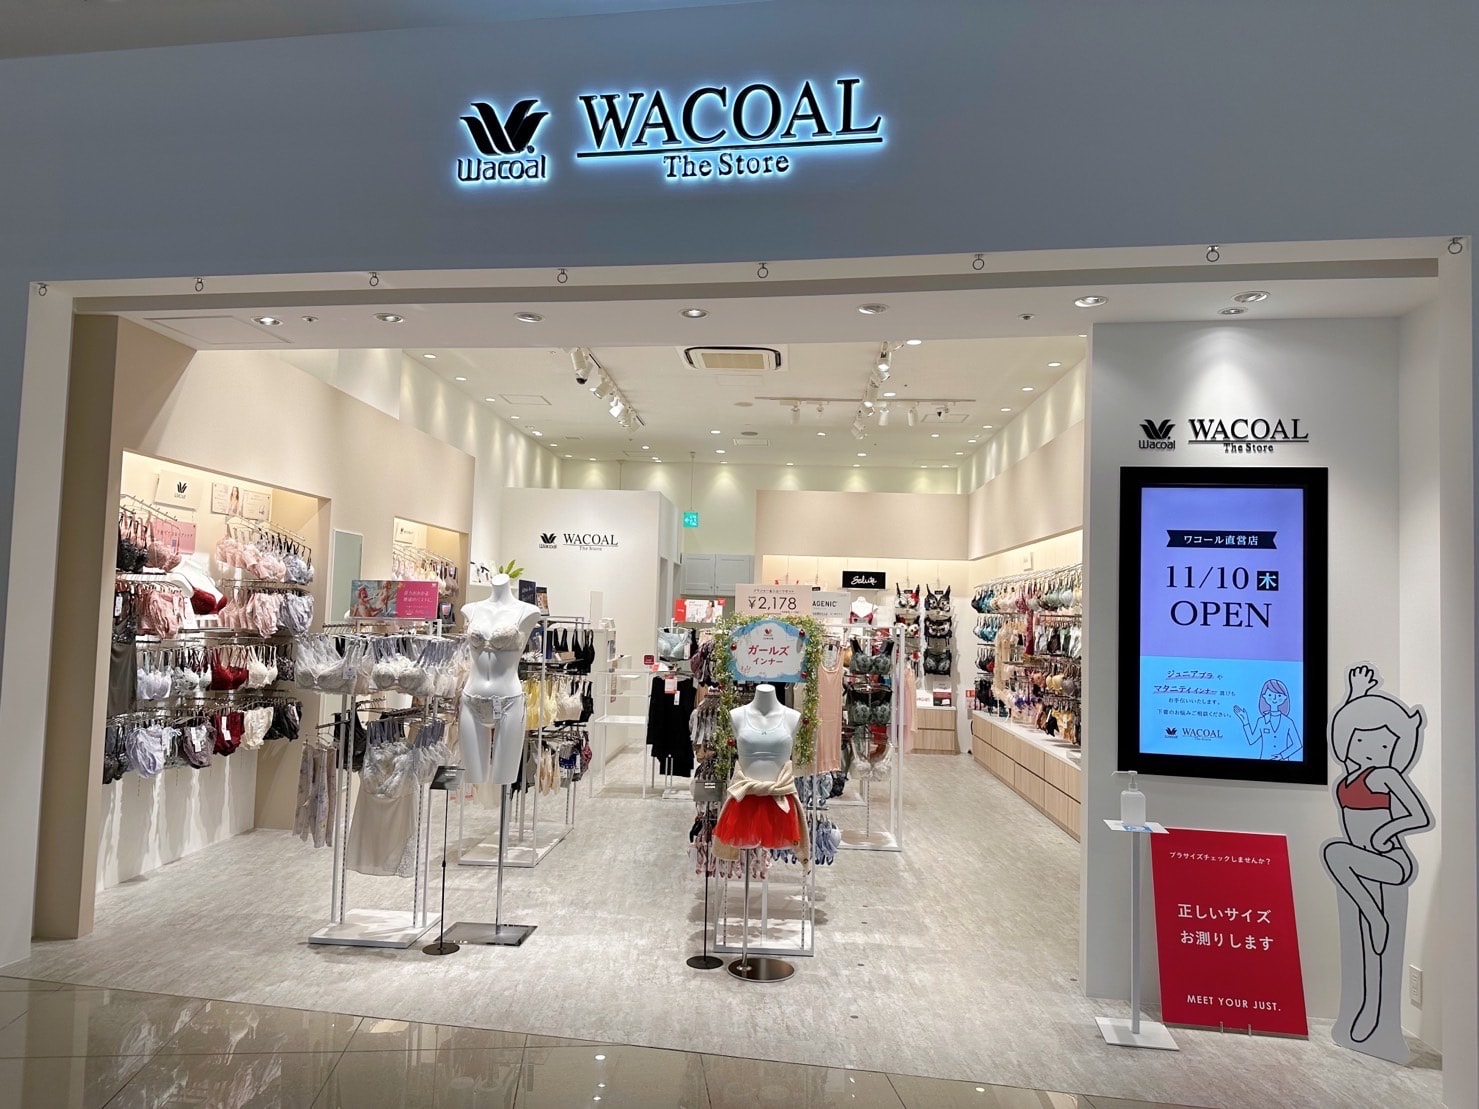 WACOAL The Store ららぽーと富士見店 | 店舗を探す | ワコール